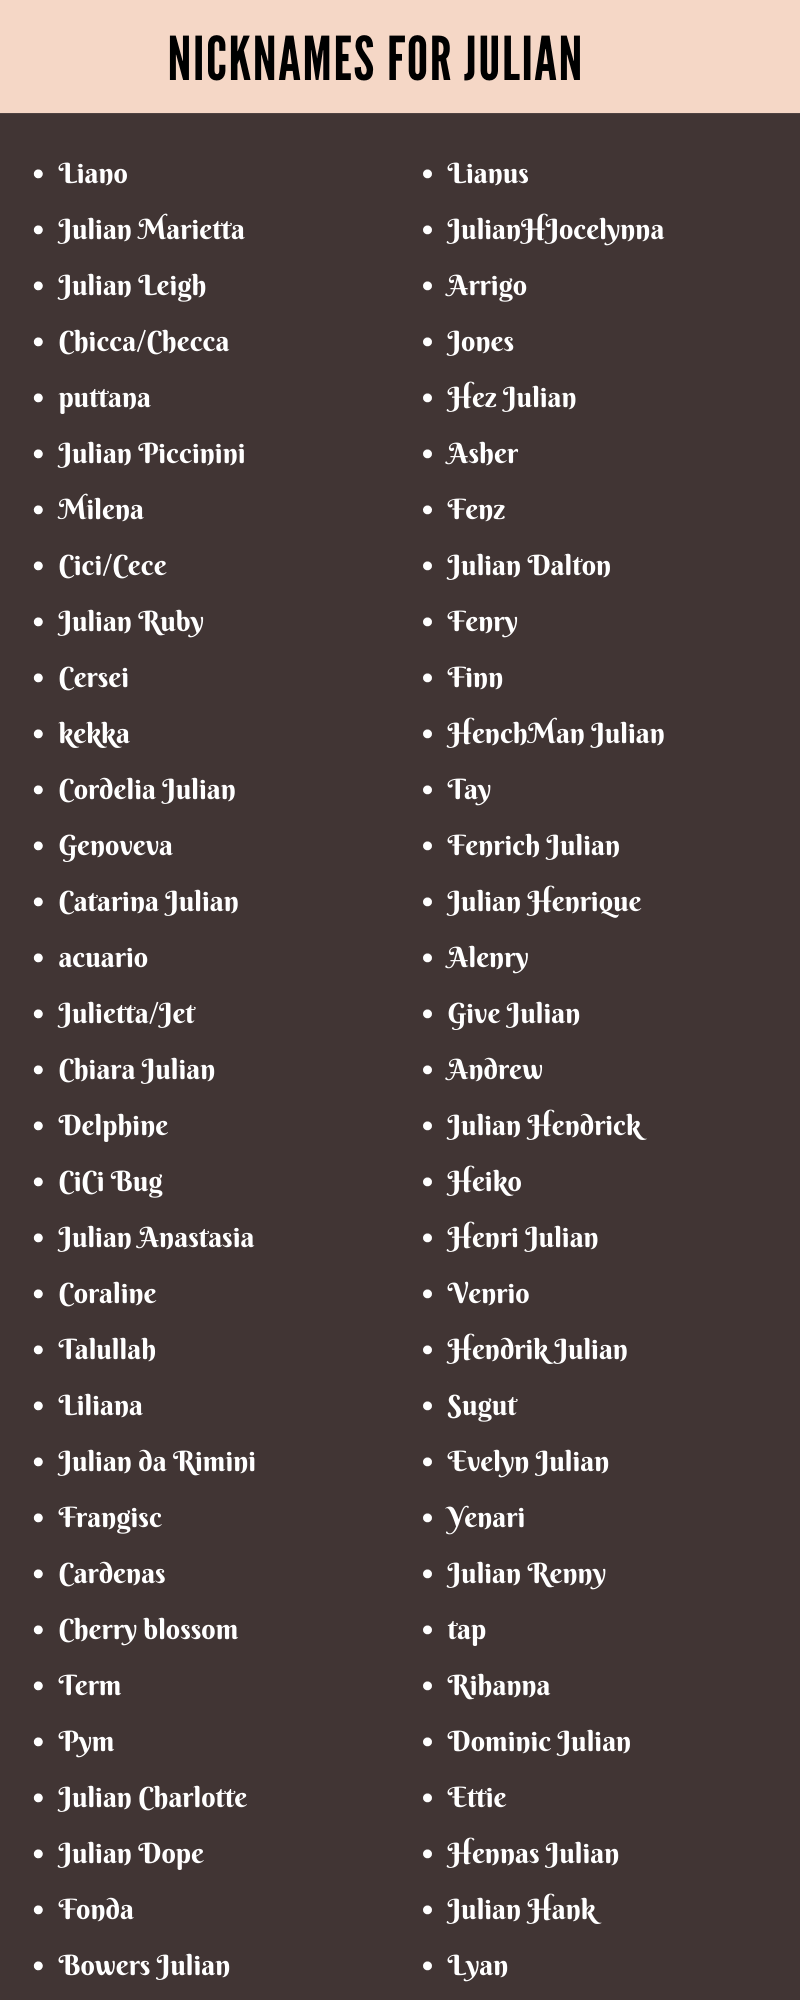 Nicknames for Julian